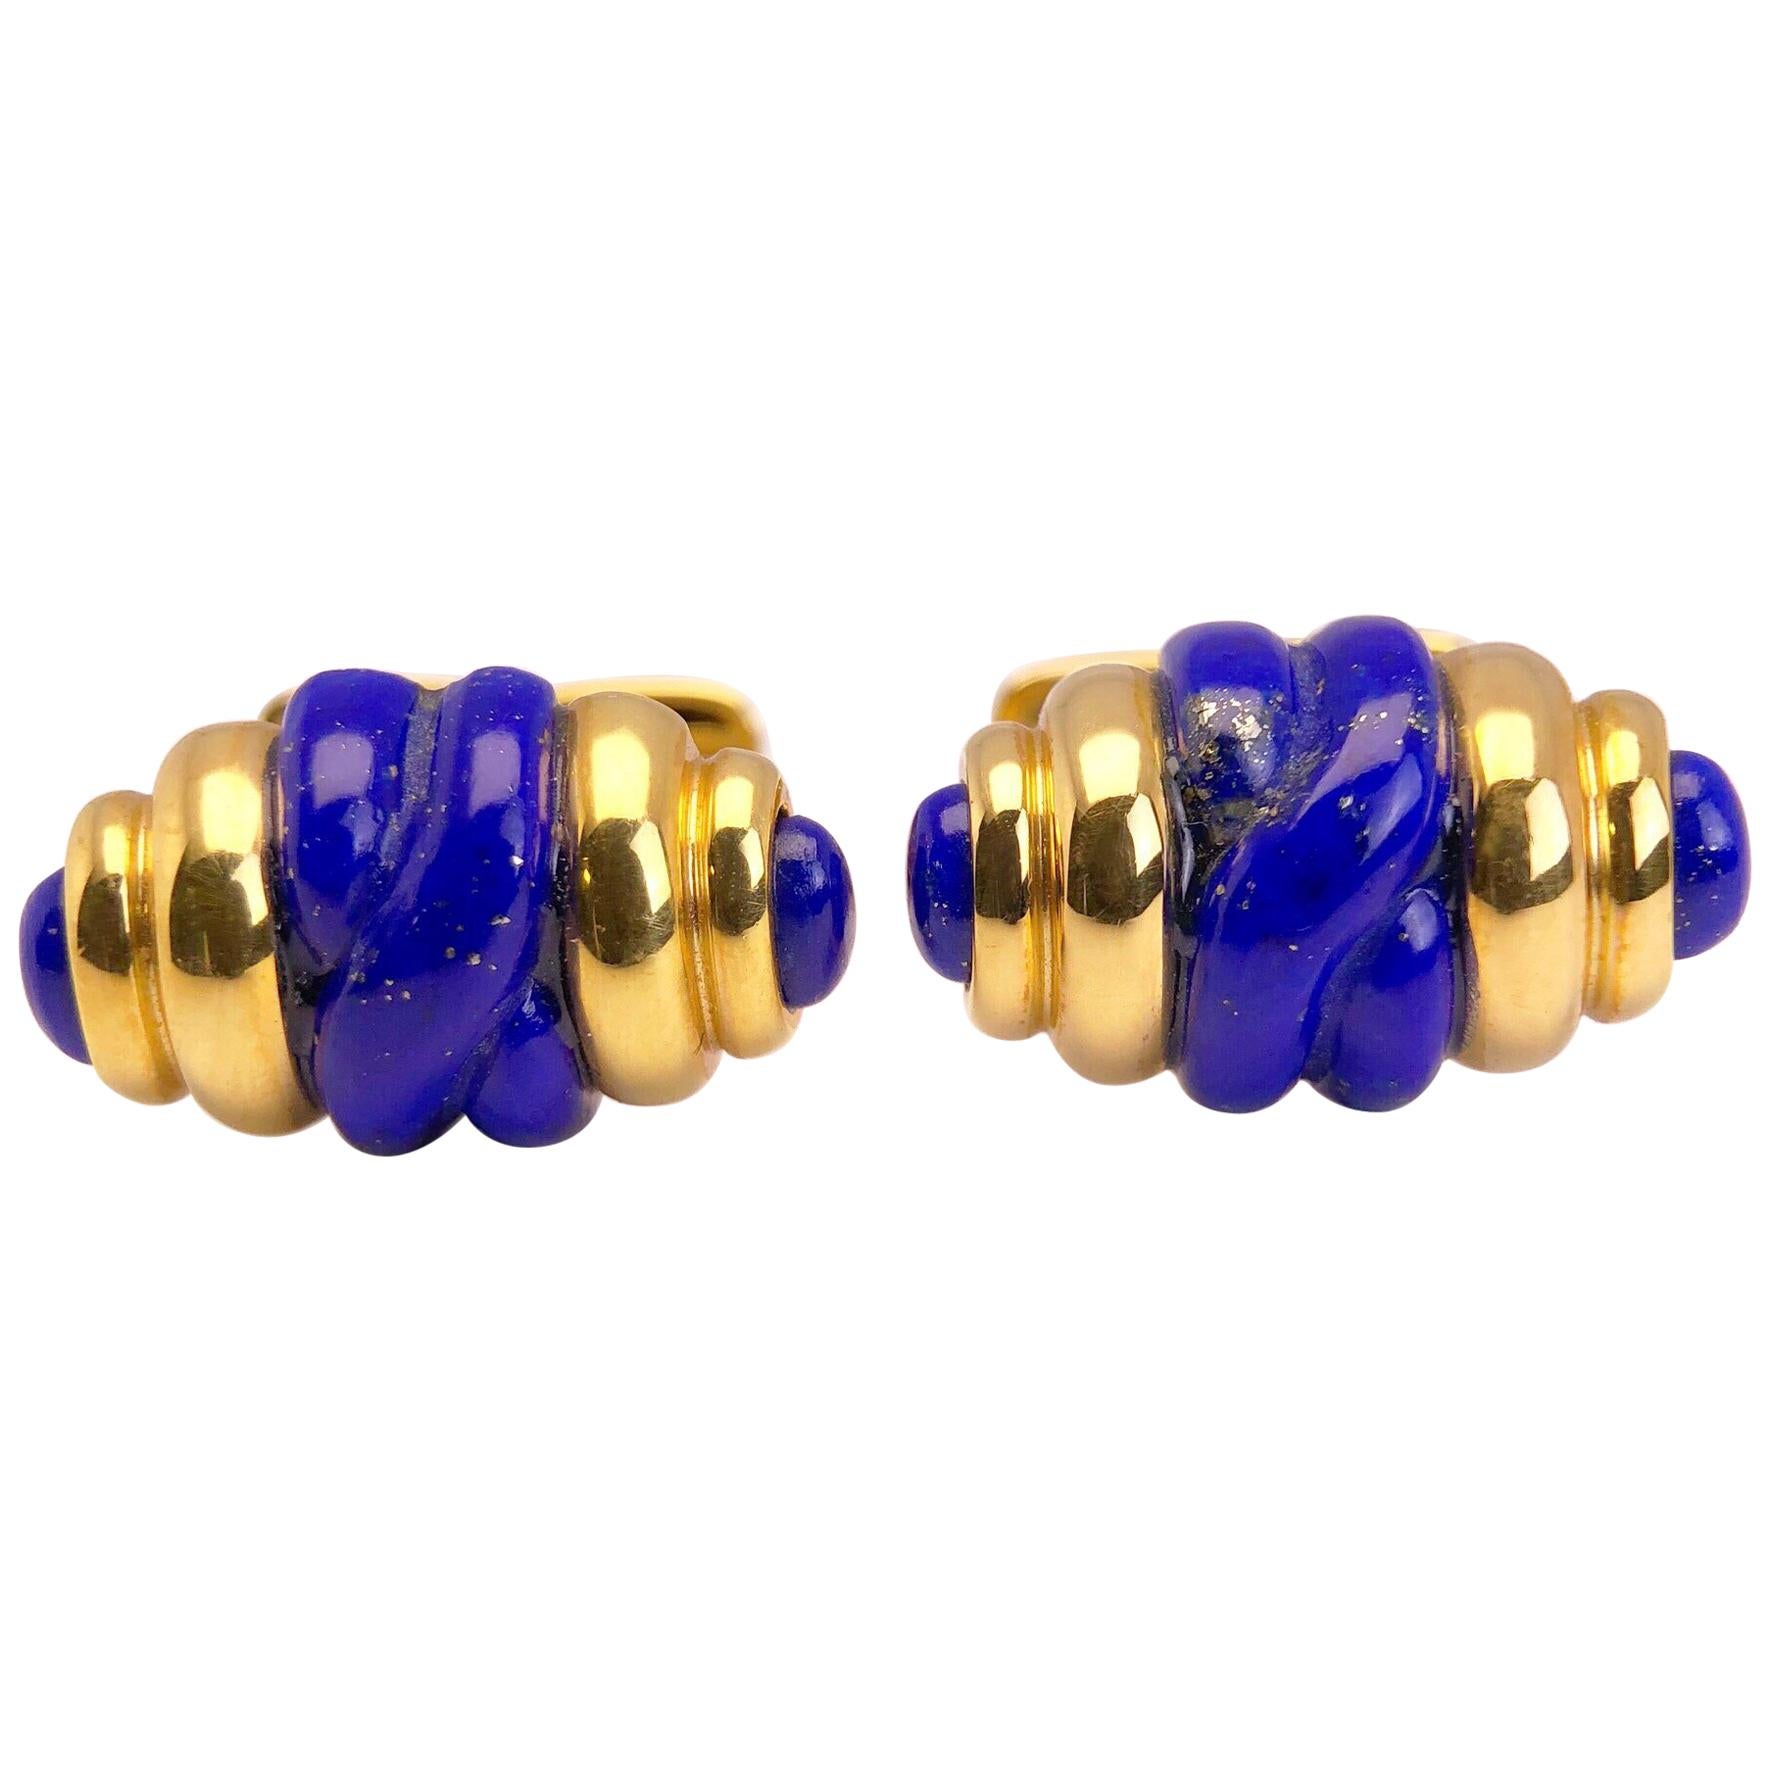 18 Karat Yellow Gold and Lapis Lazuli Barrel Shaped Cuff Links